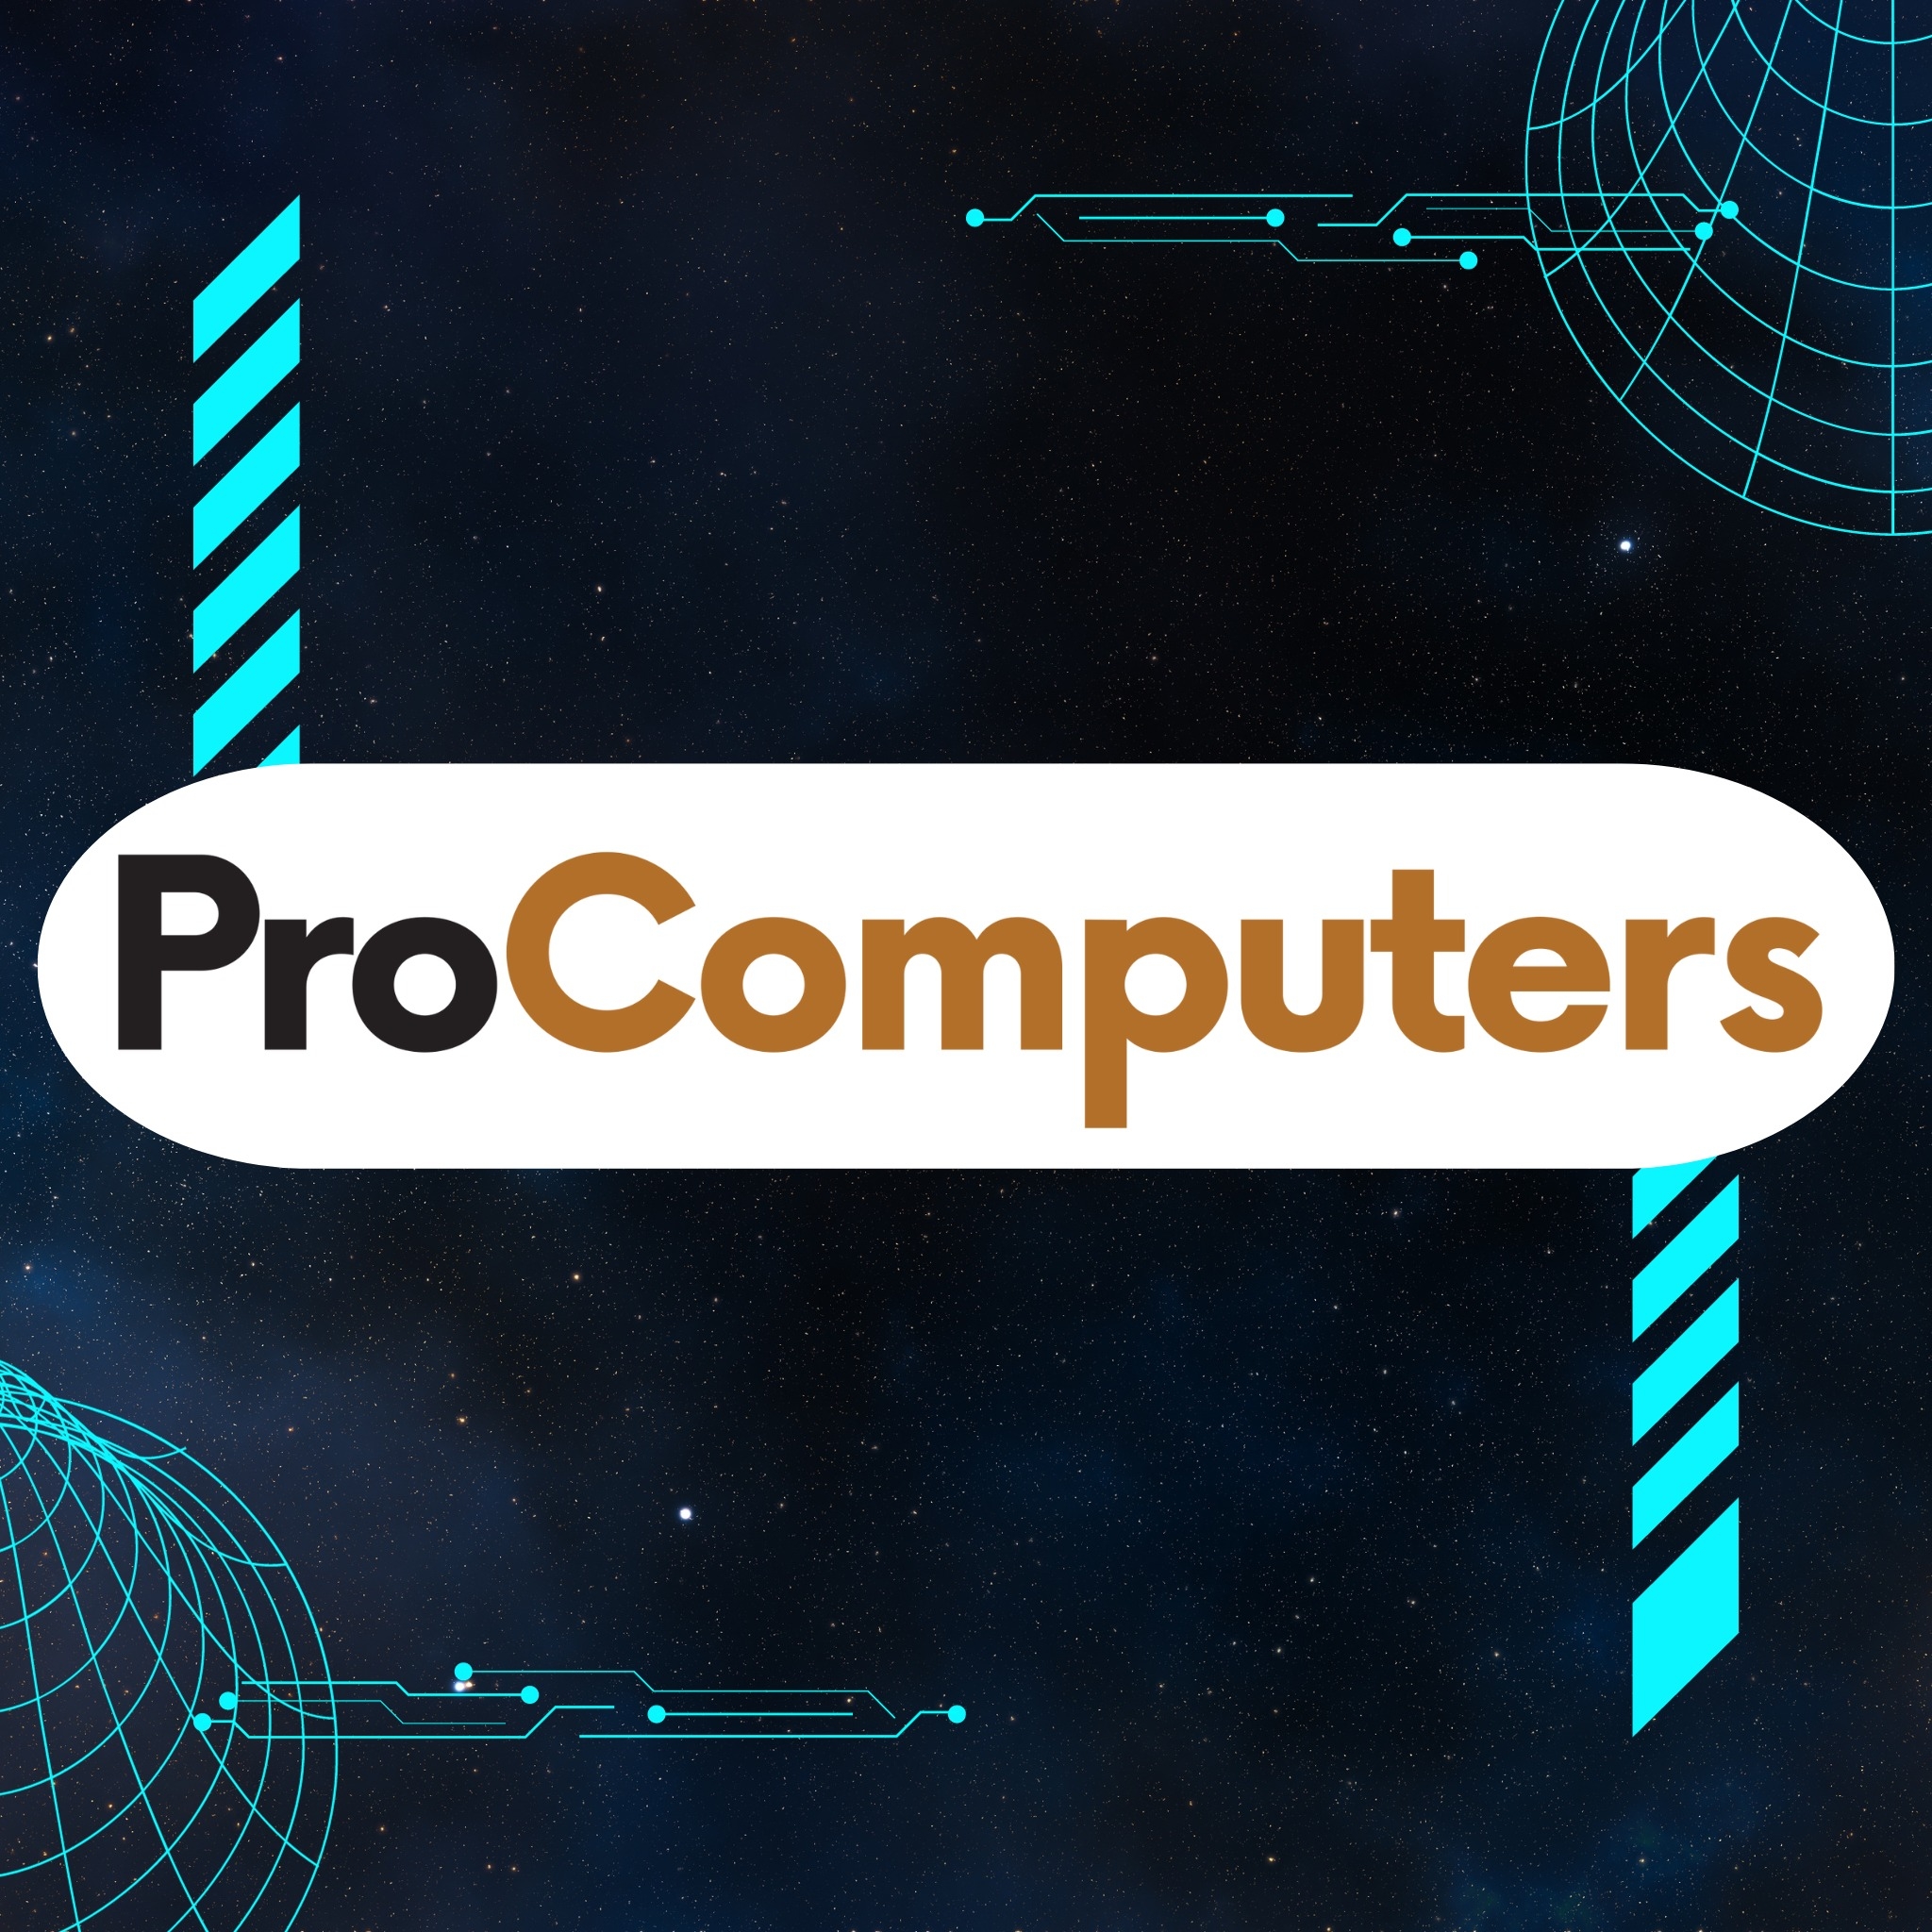 Pro Computers